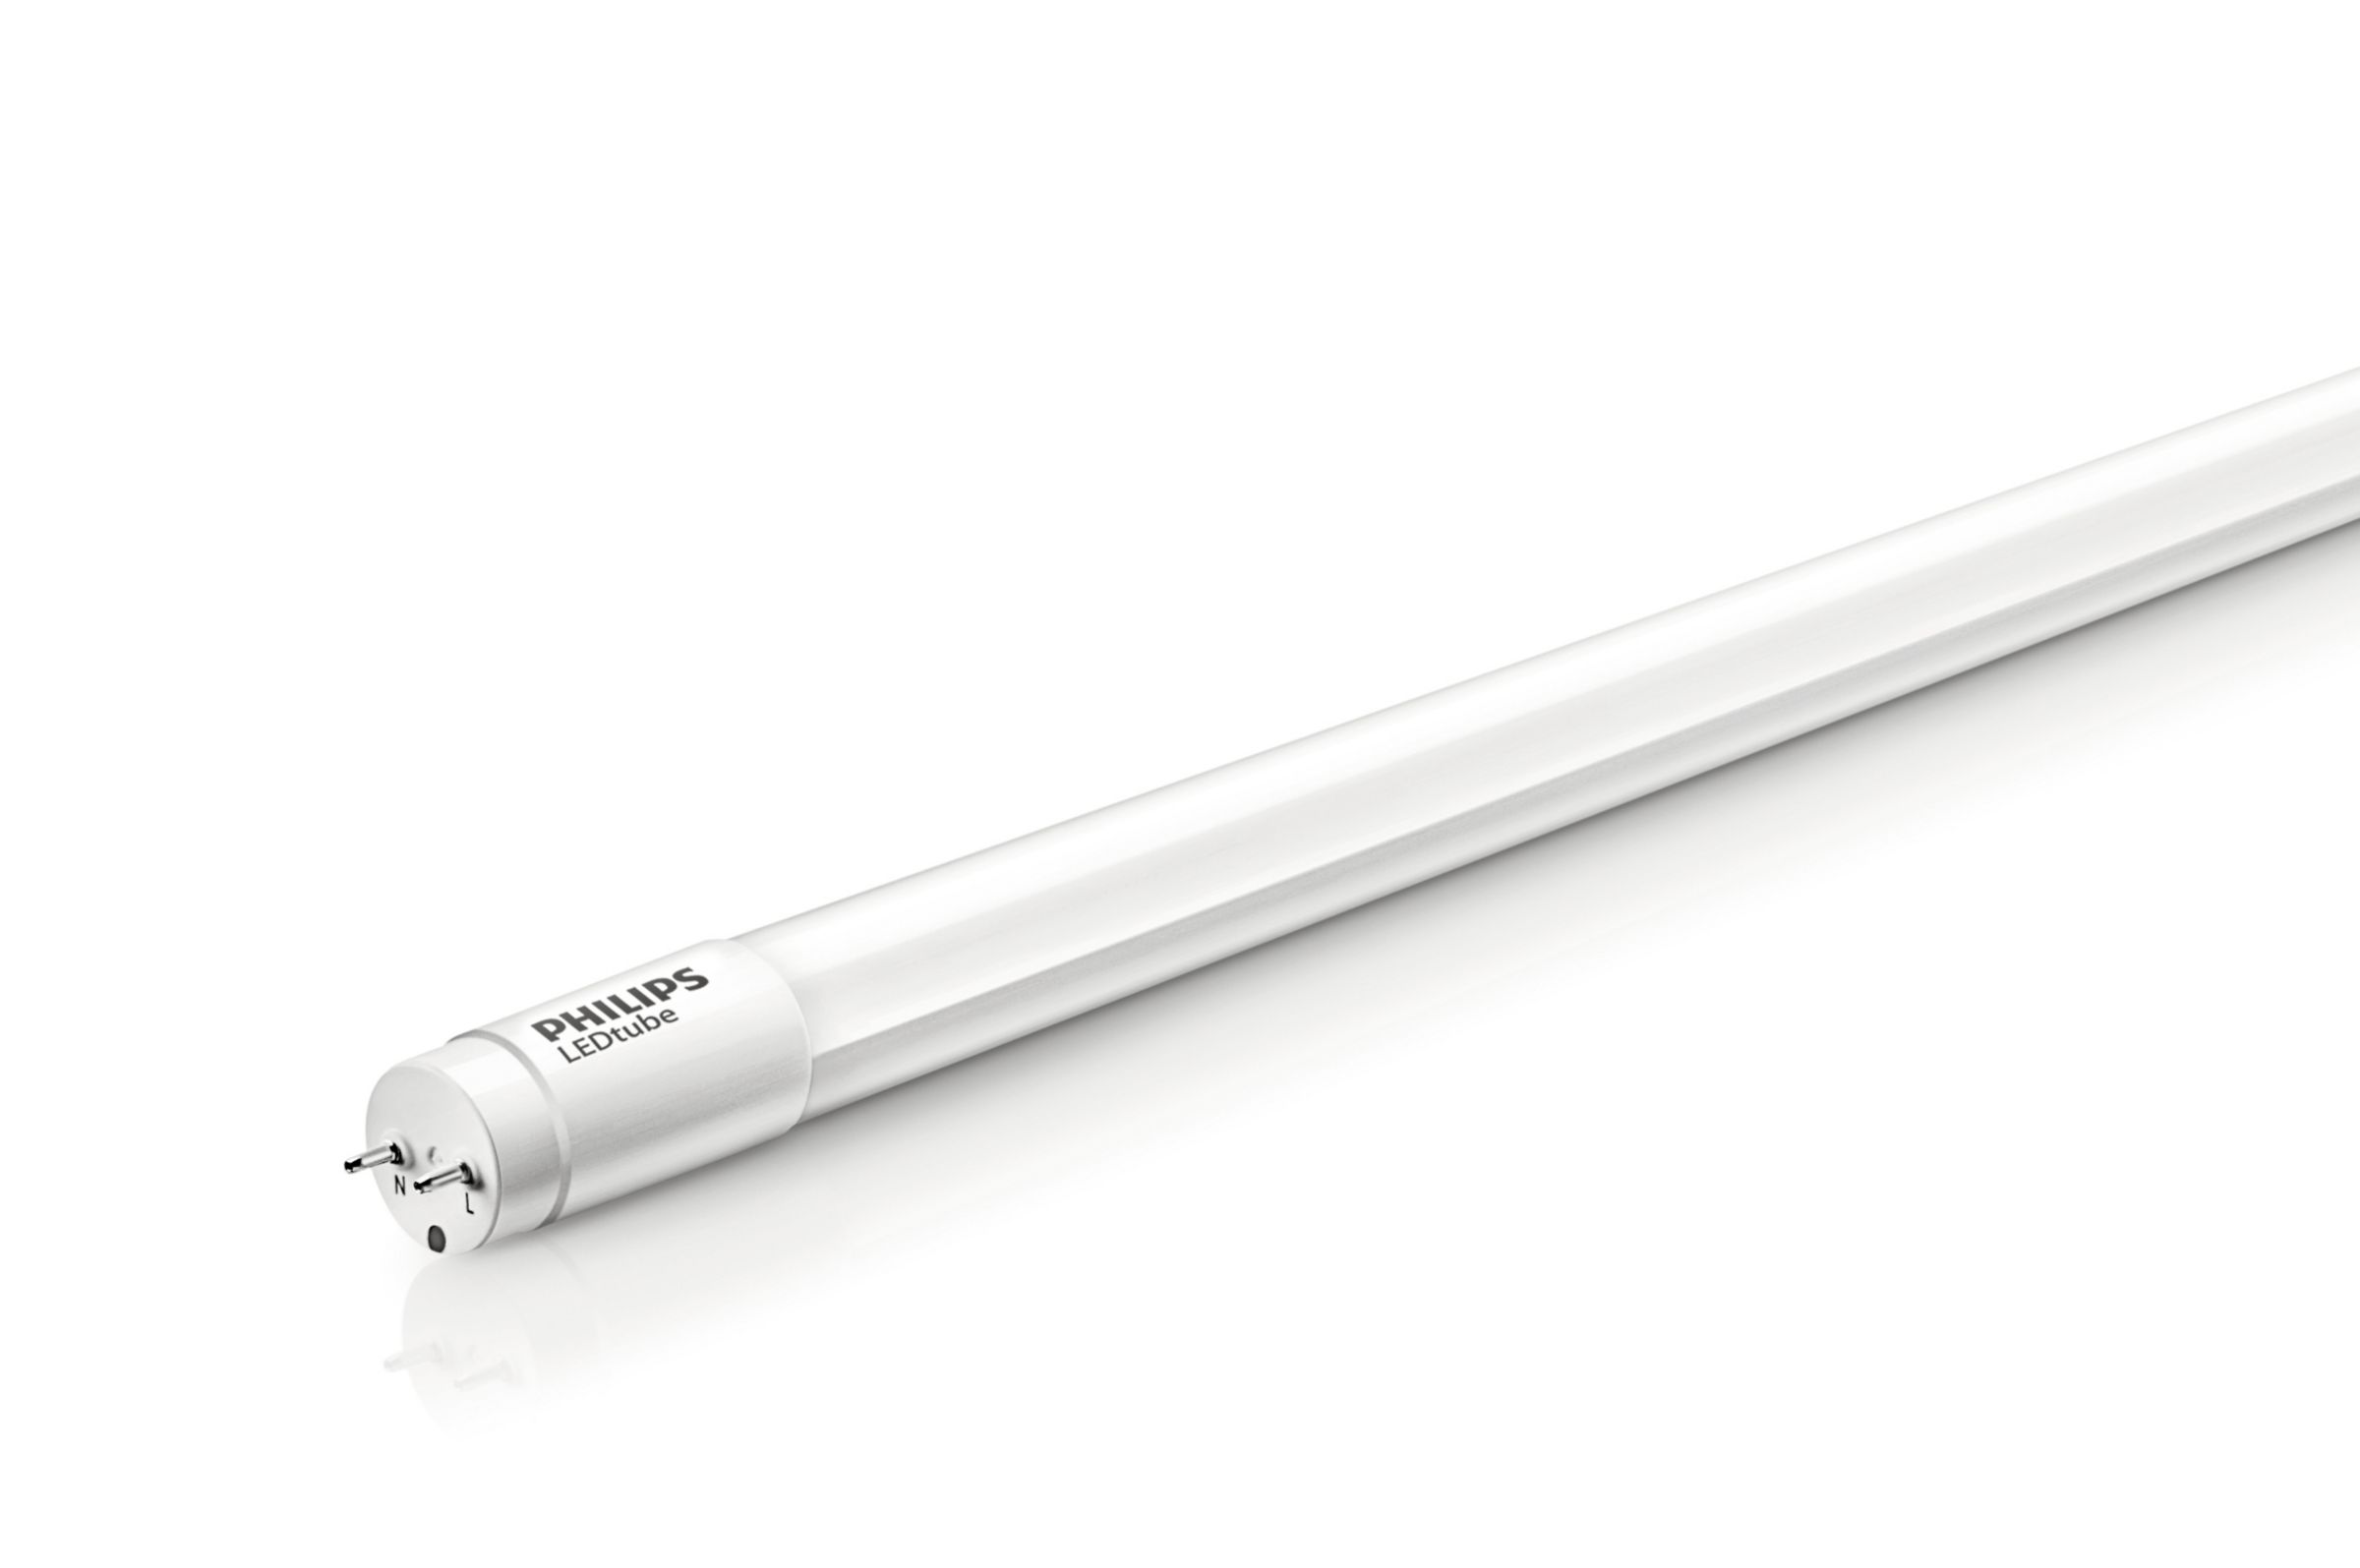 4x Fluorescent LED Lamp T8 Tube 4000K Cool White 20W = 58W 5ft Philips Corepro 